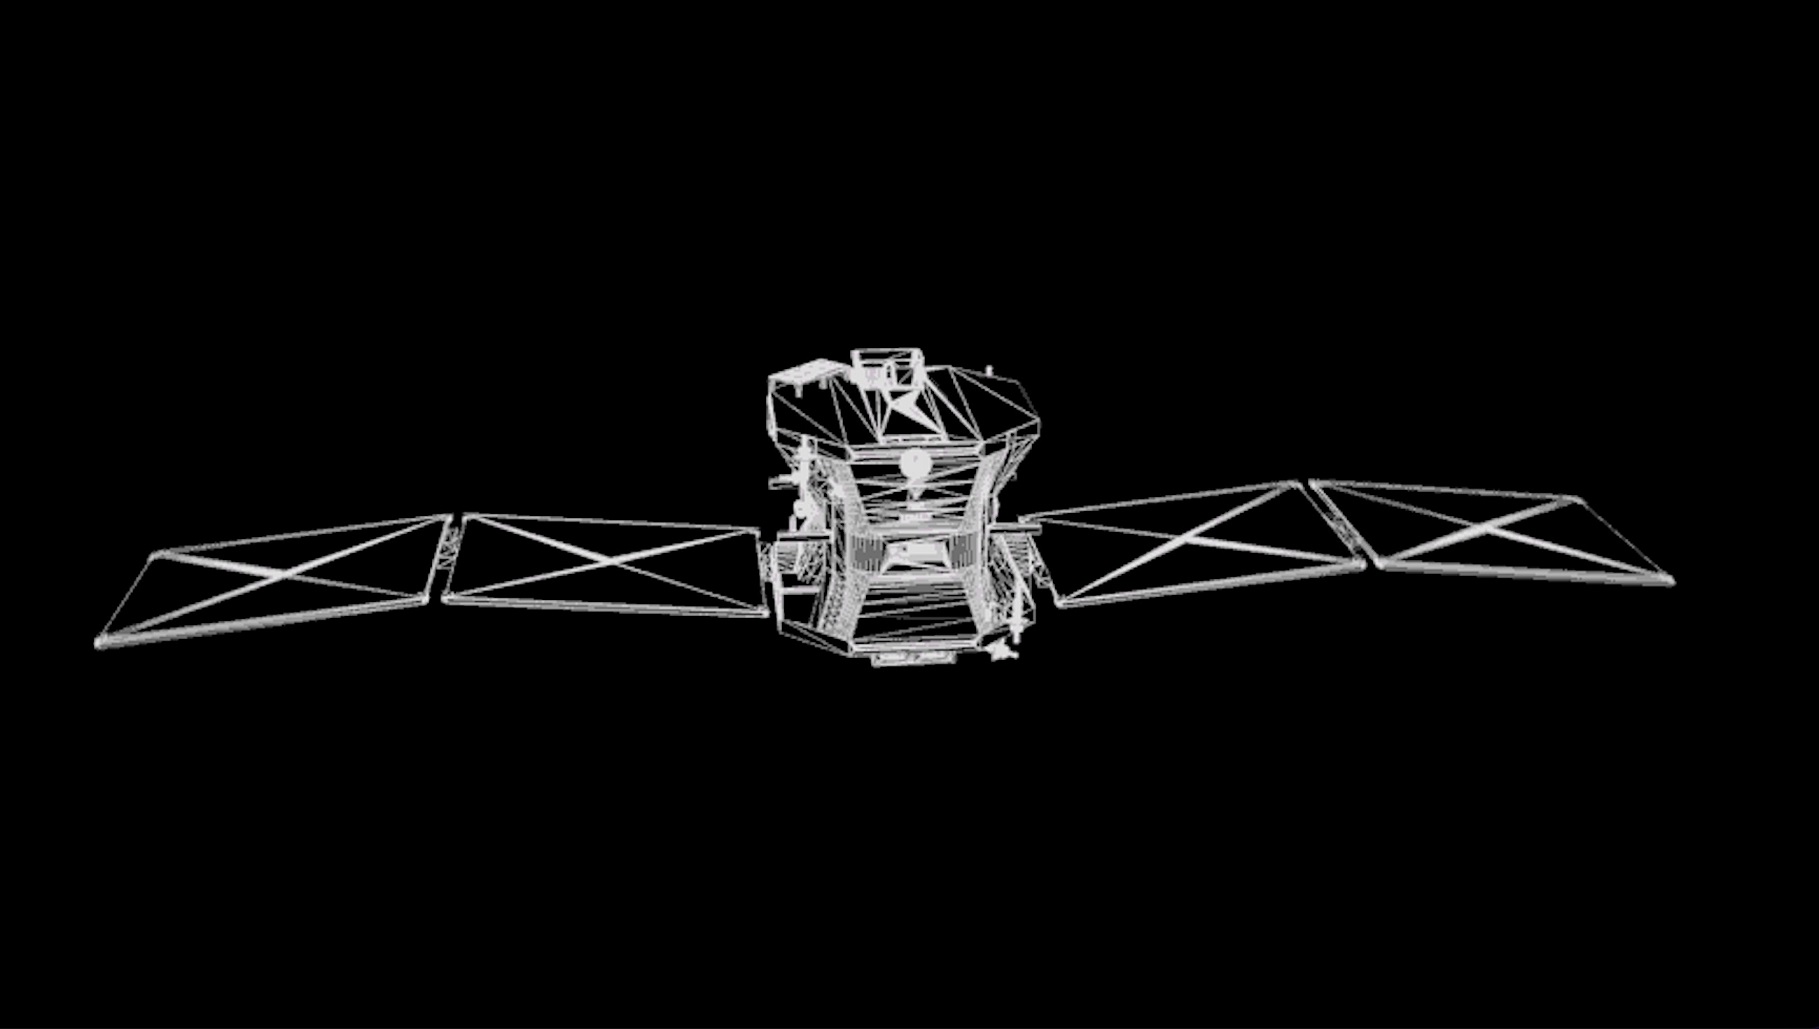 Jackal autonomous orbital vehicle. Credit True Anomaly